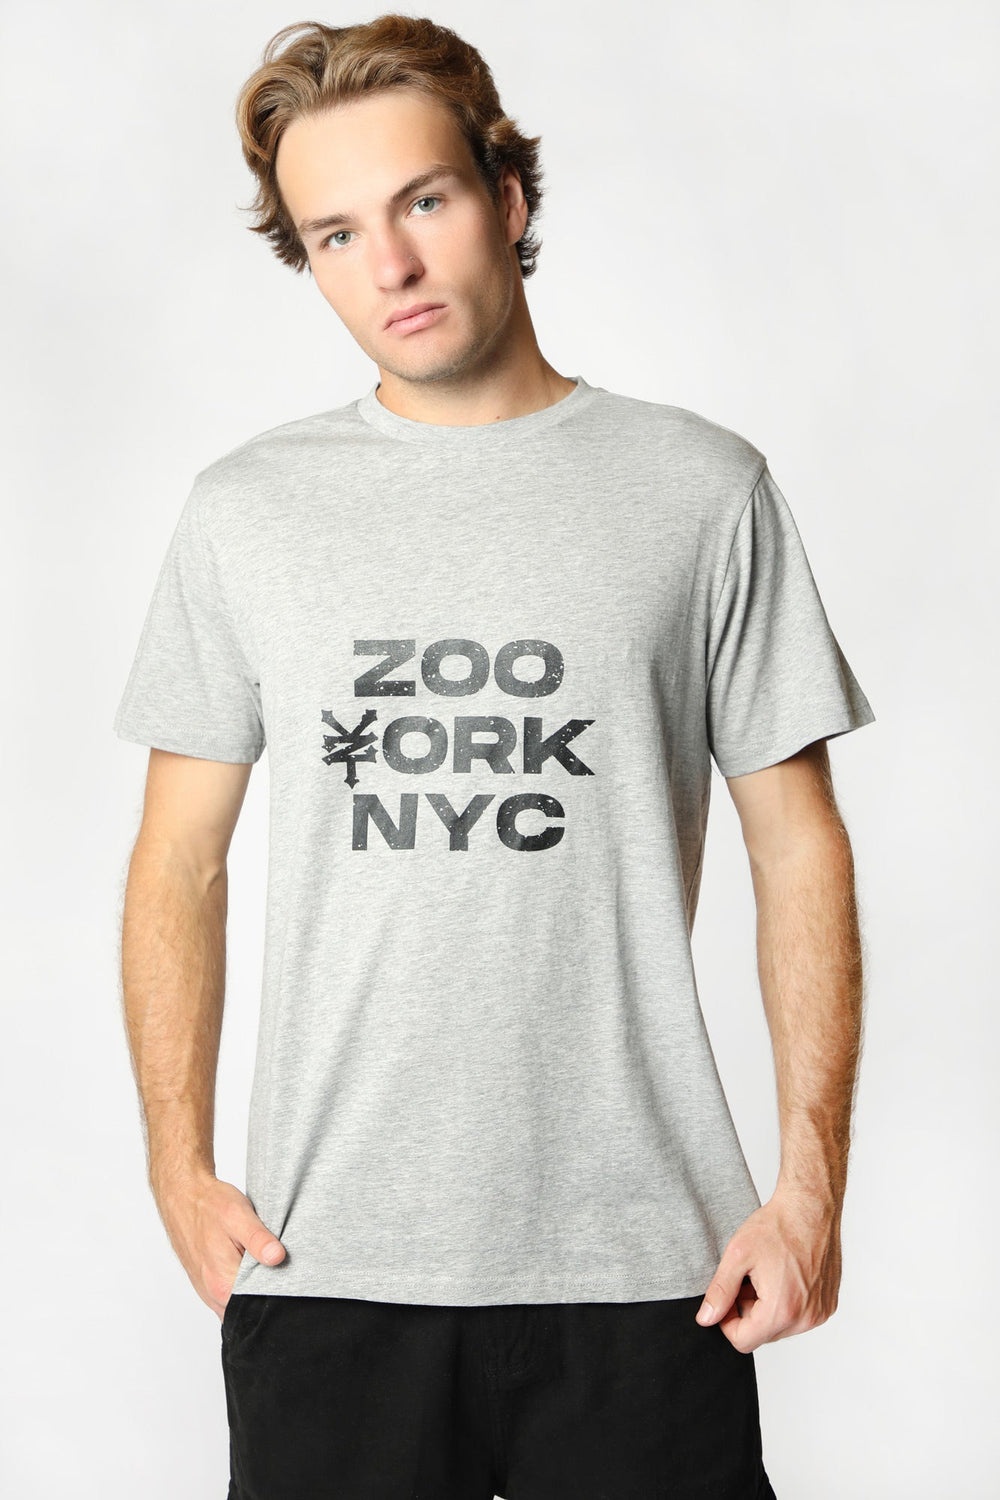 T-Shirt Imprimé Logo NYC Zoo York Homme Gris